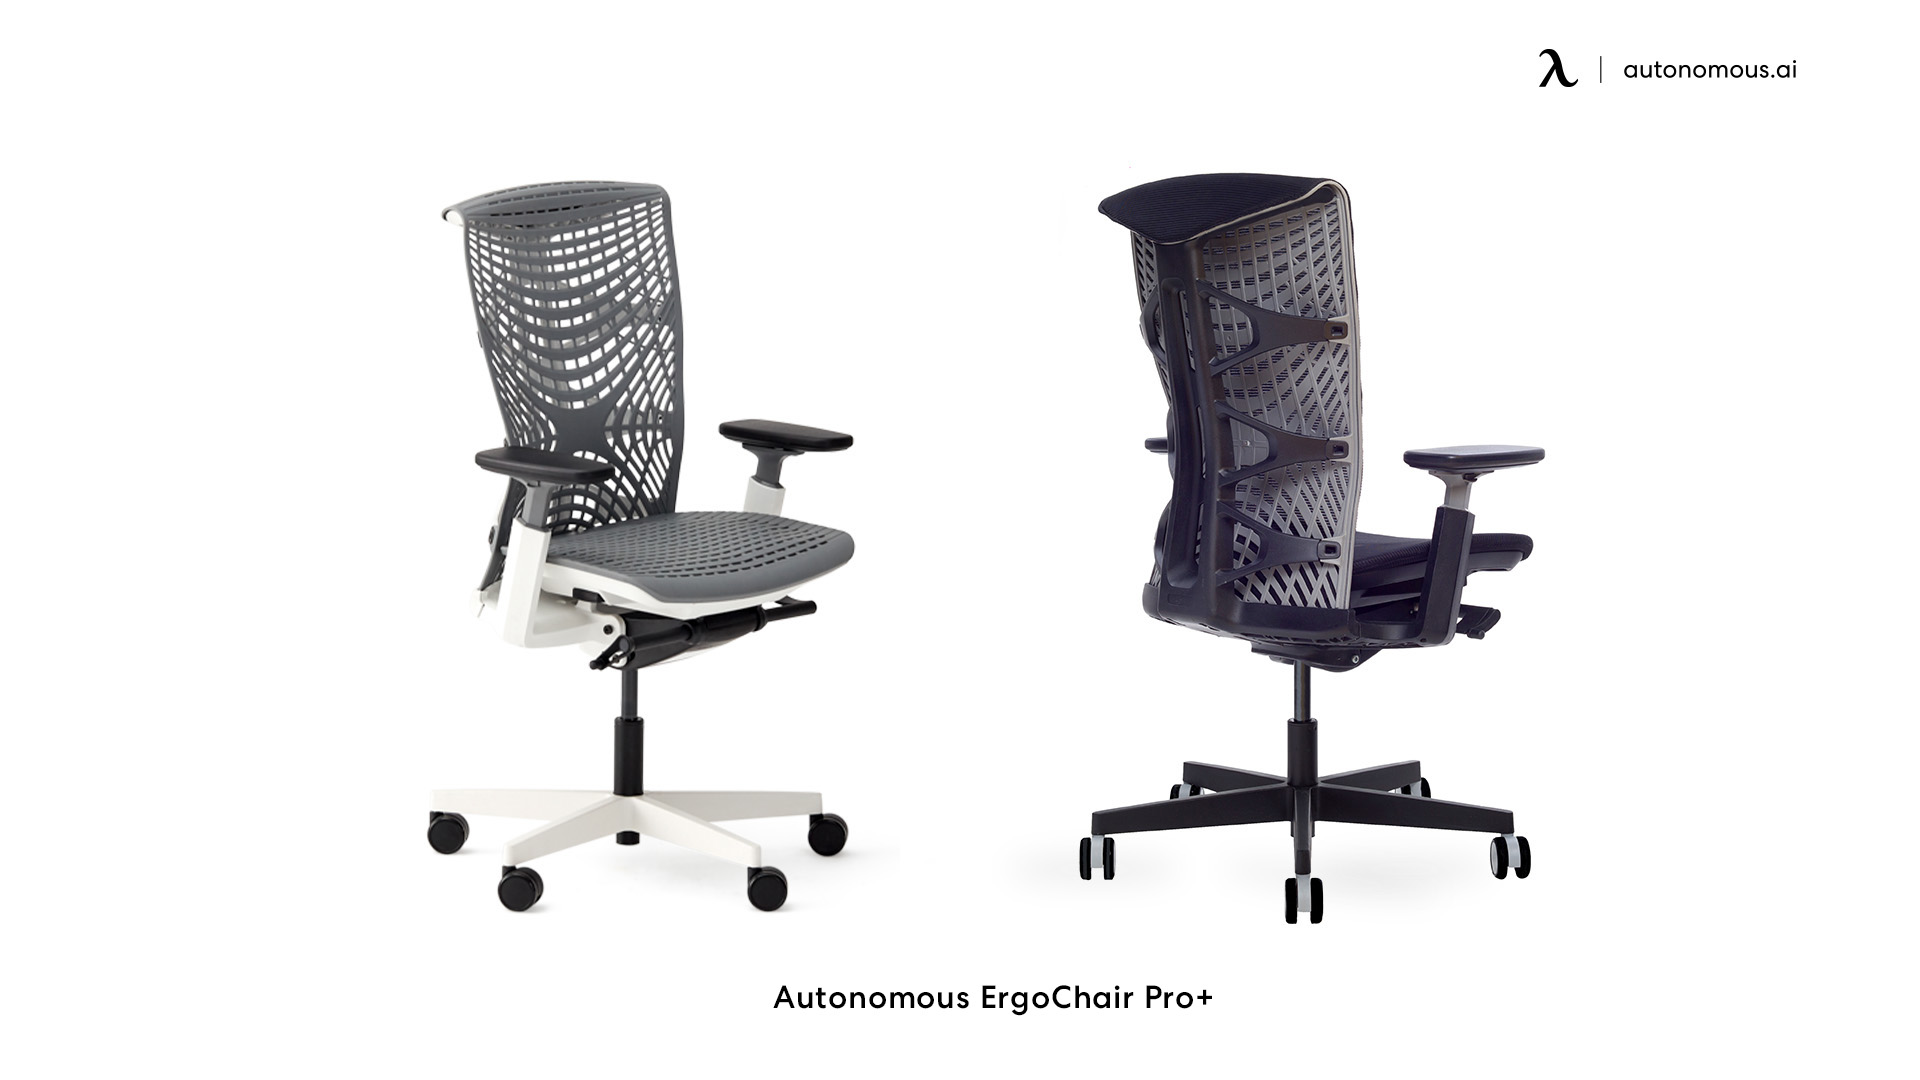 ErgoChair Plus adjustable height chair